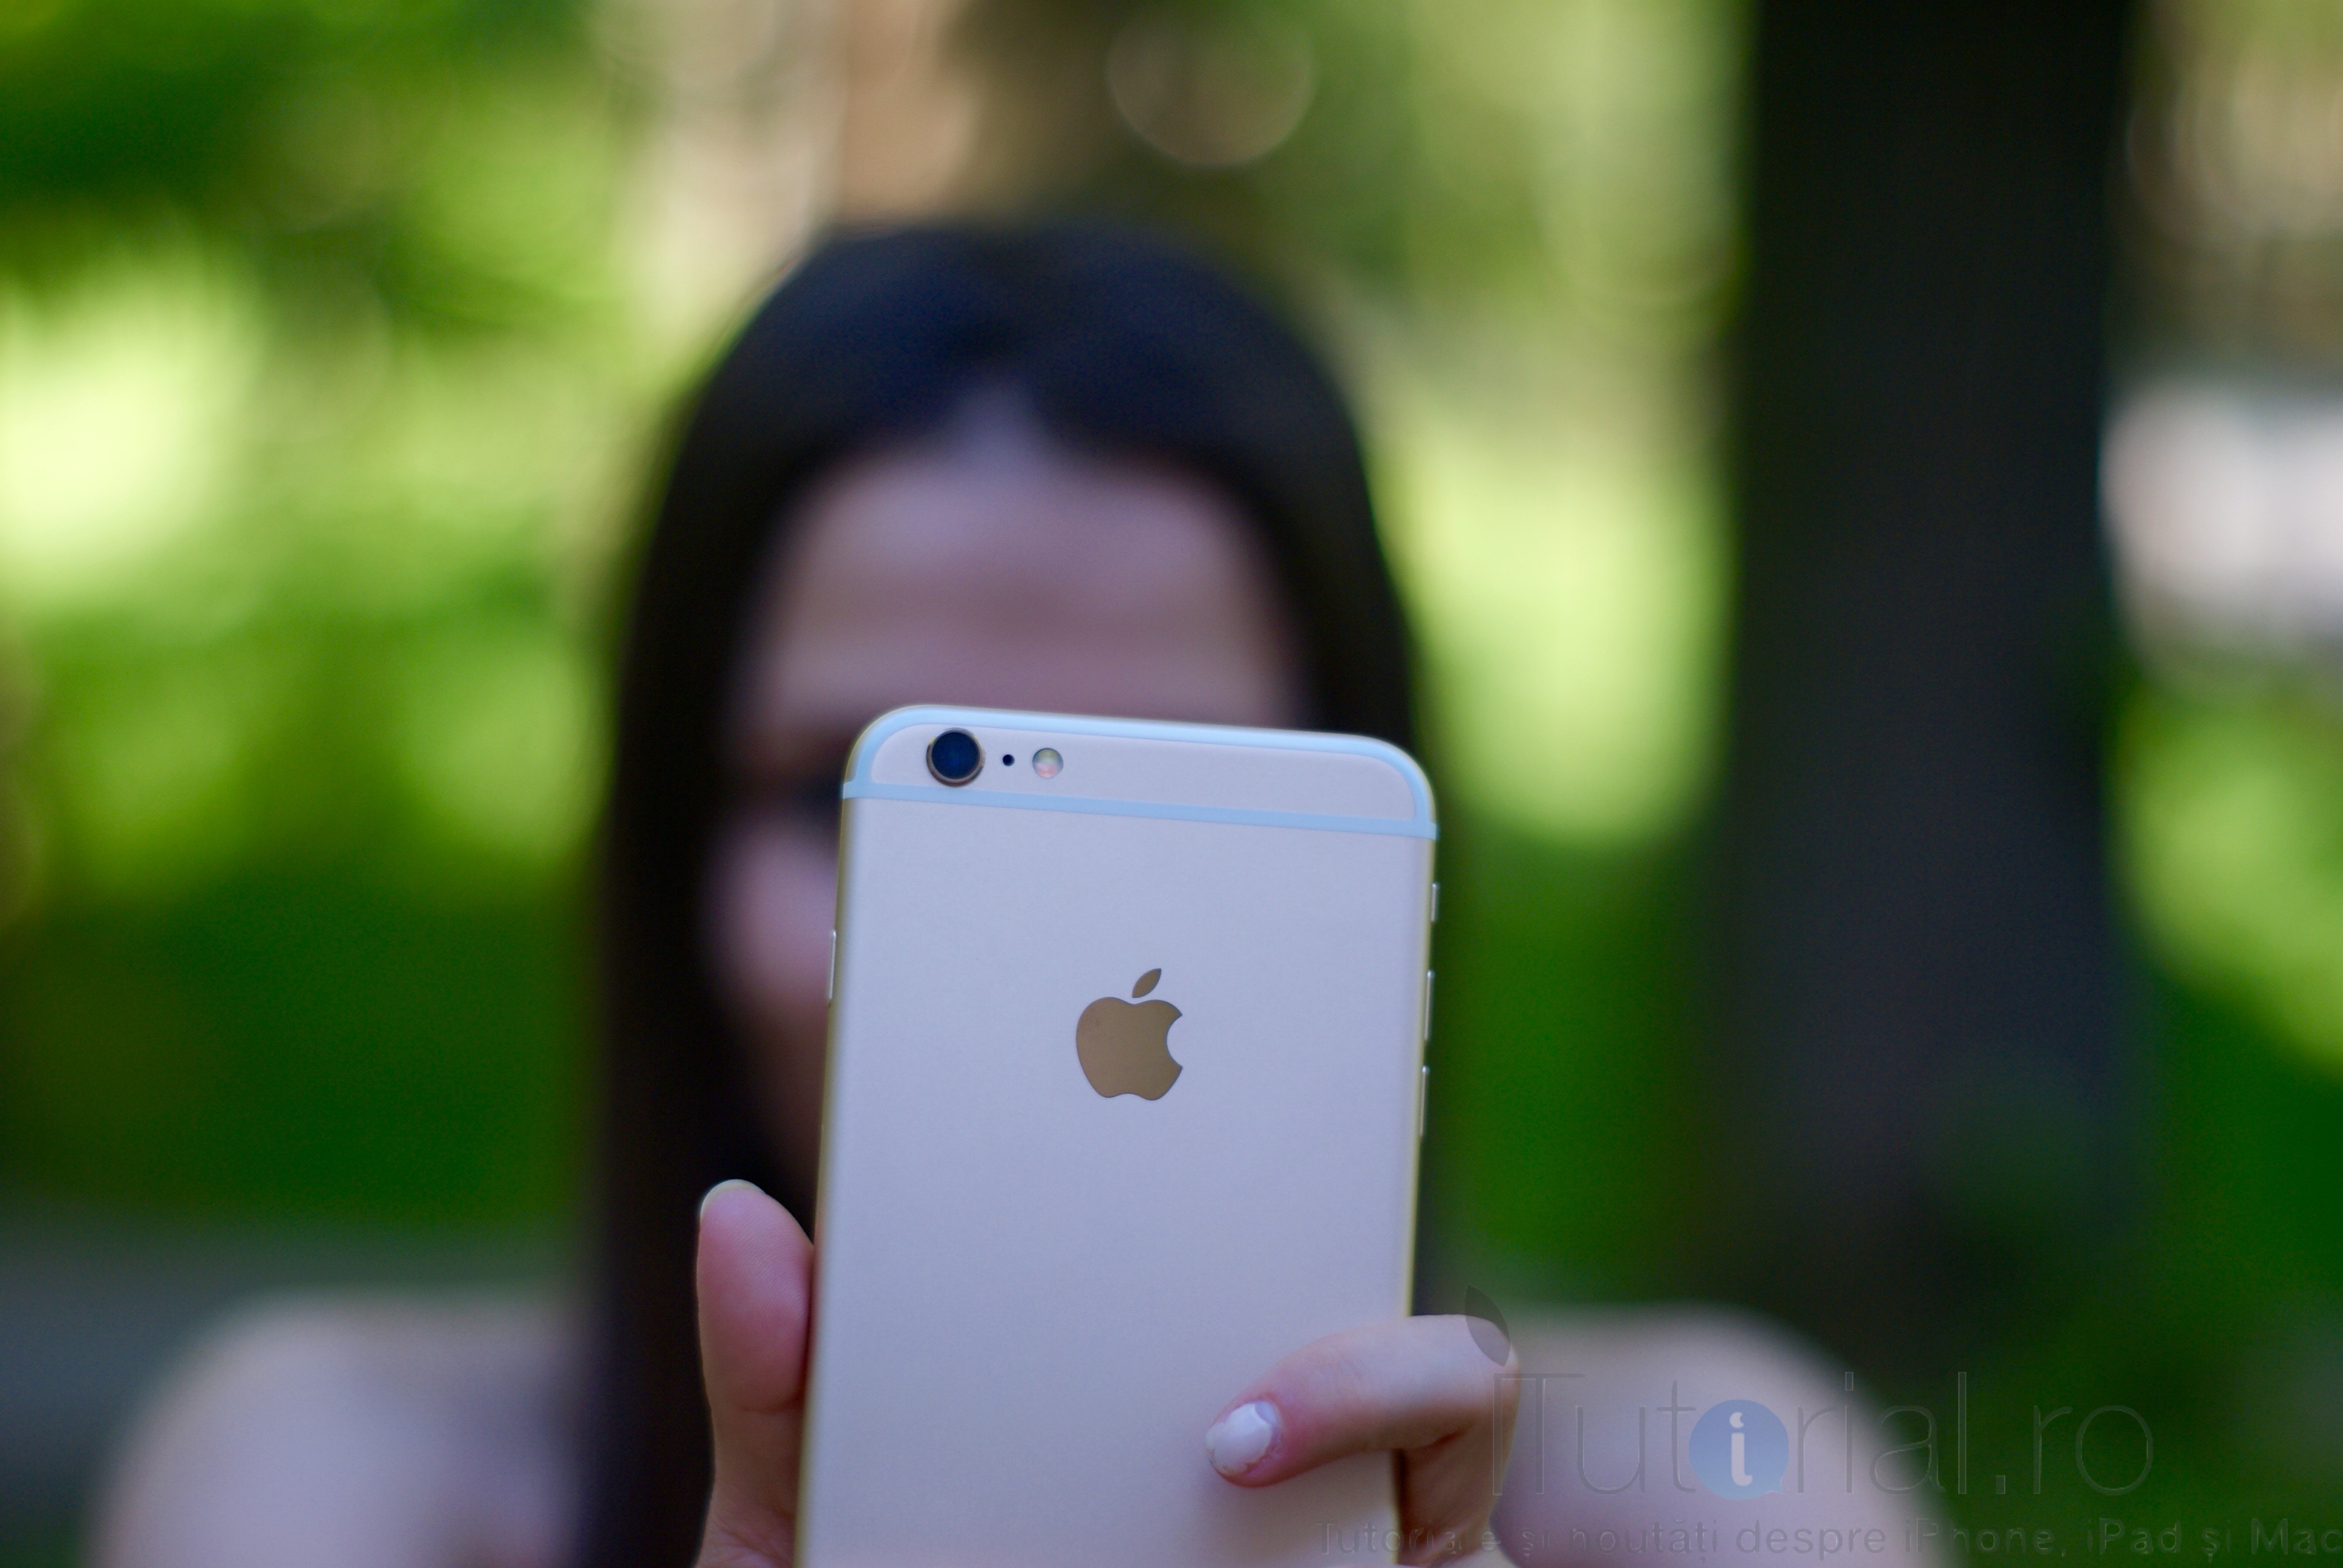 apologize Springboard stack iPhone 6s Plus review in romana - nu s-a schimbat doar totul